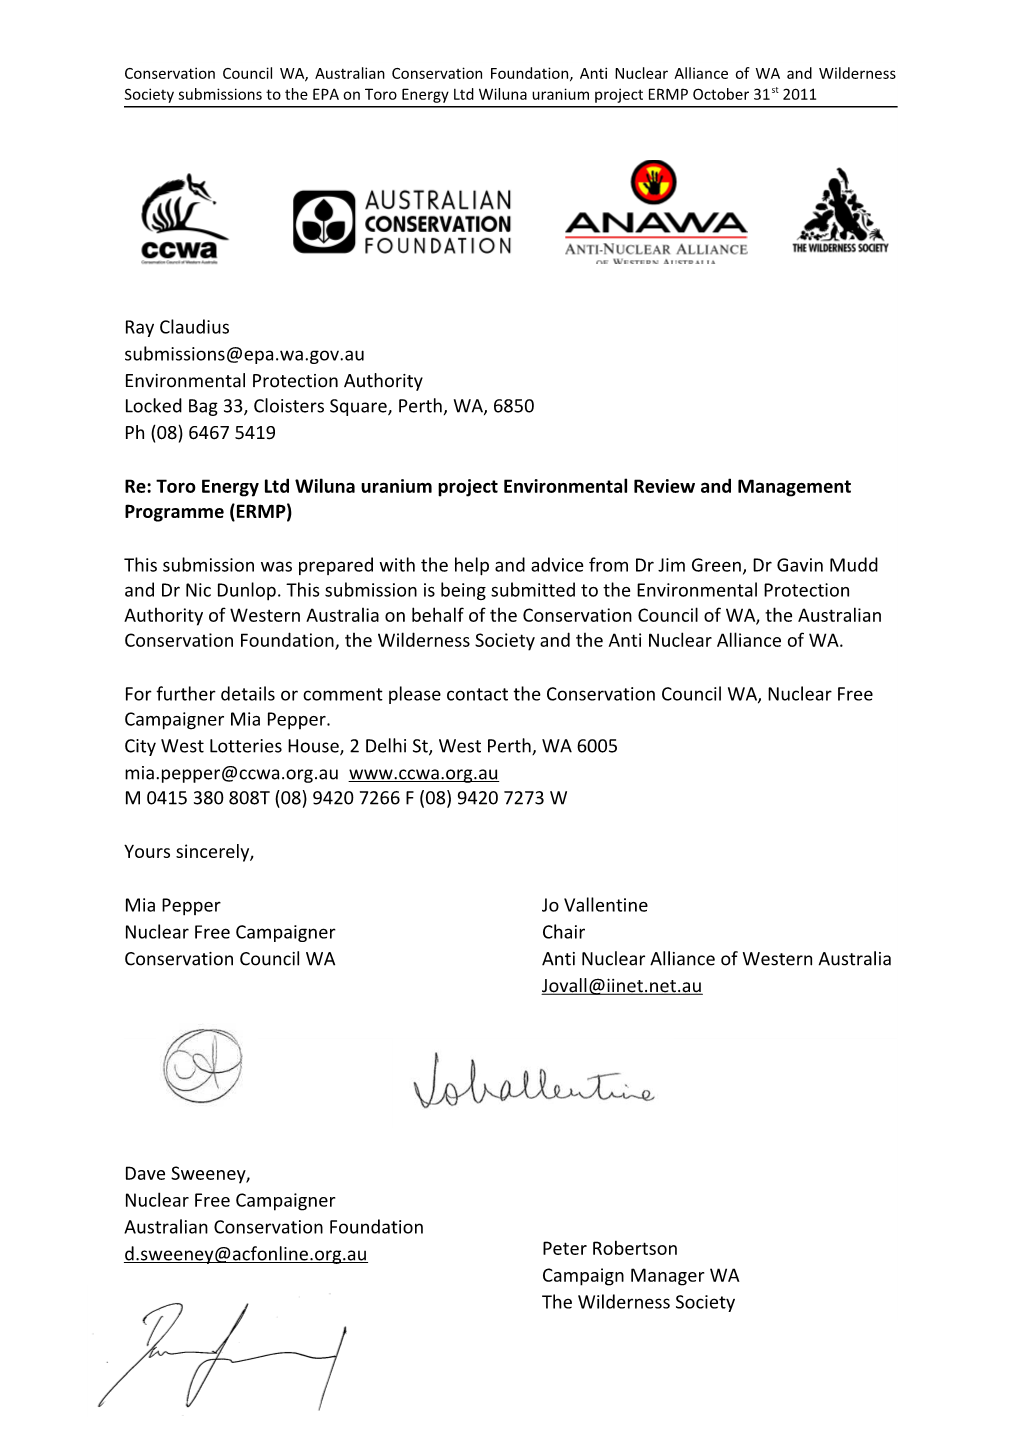 Re: Toro Energy Ltd Wiluna Uranium Project Environmental Review and Management Programme